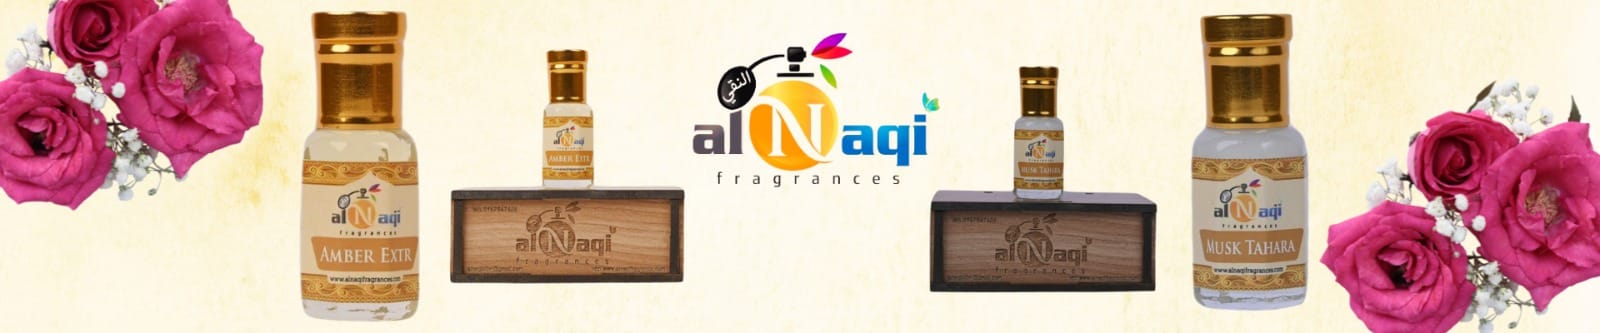 AlNaqi Fragrances